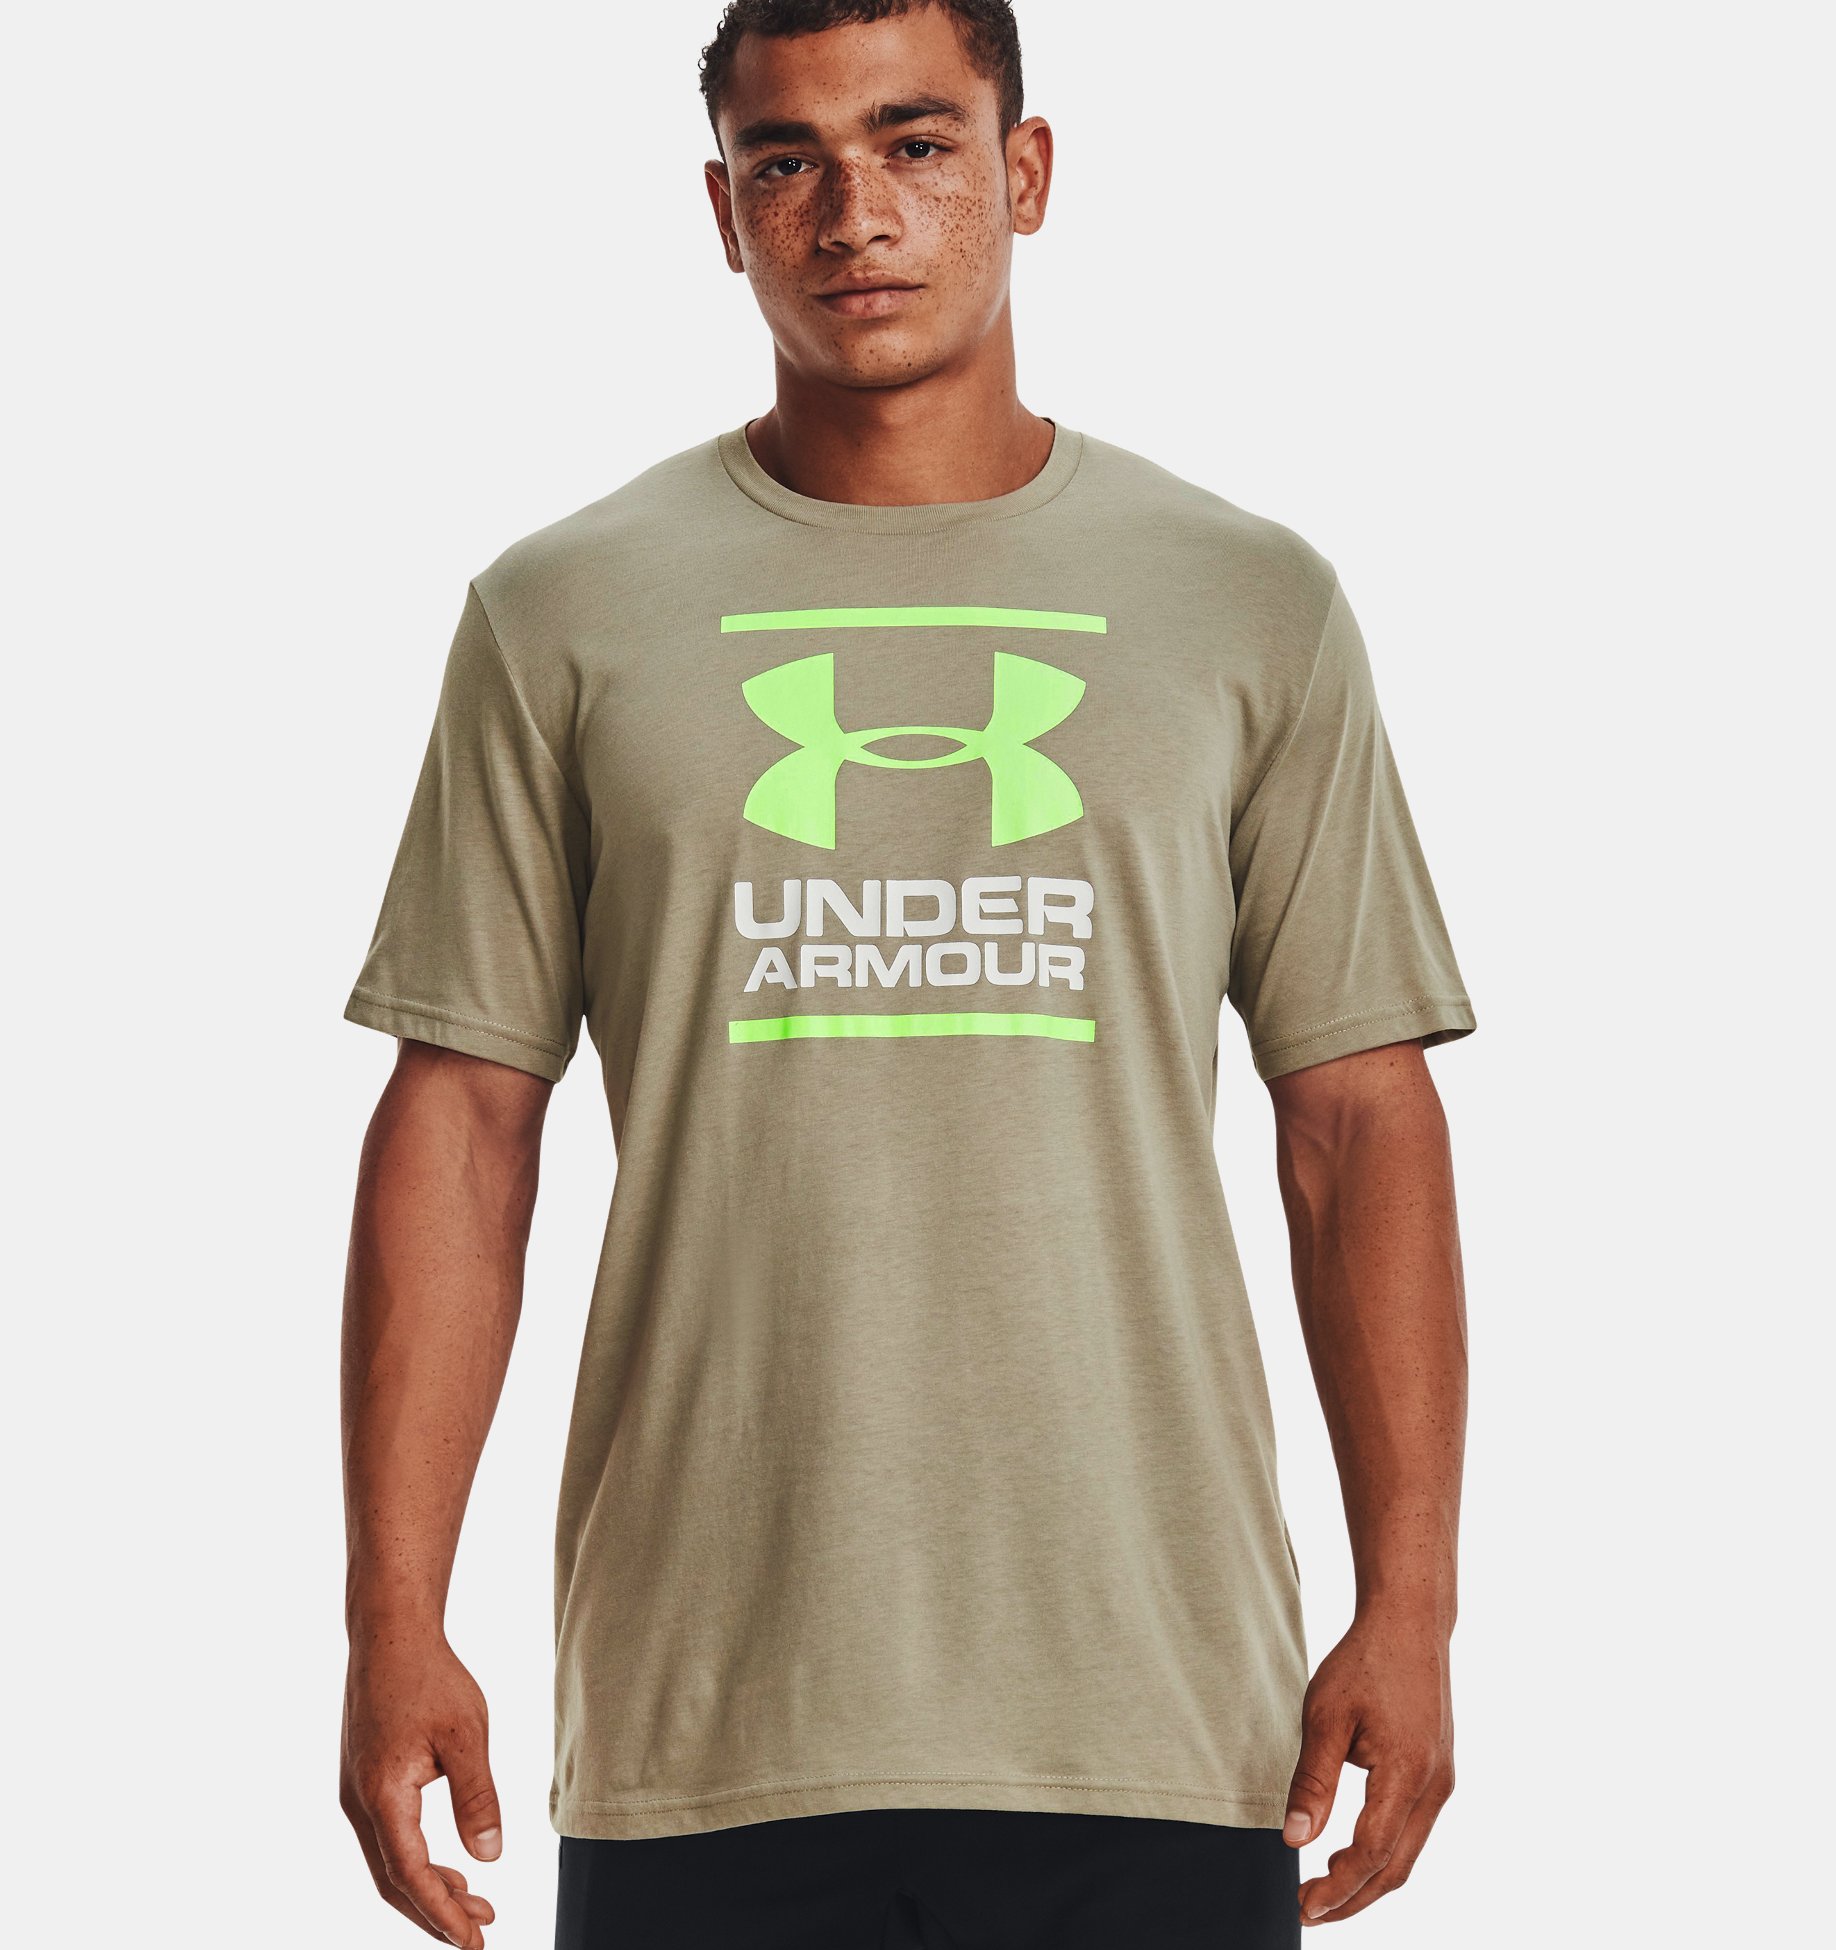 New Men's Under Armour GI Foundation Logo Sports T-Shirt Top 